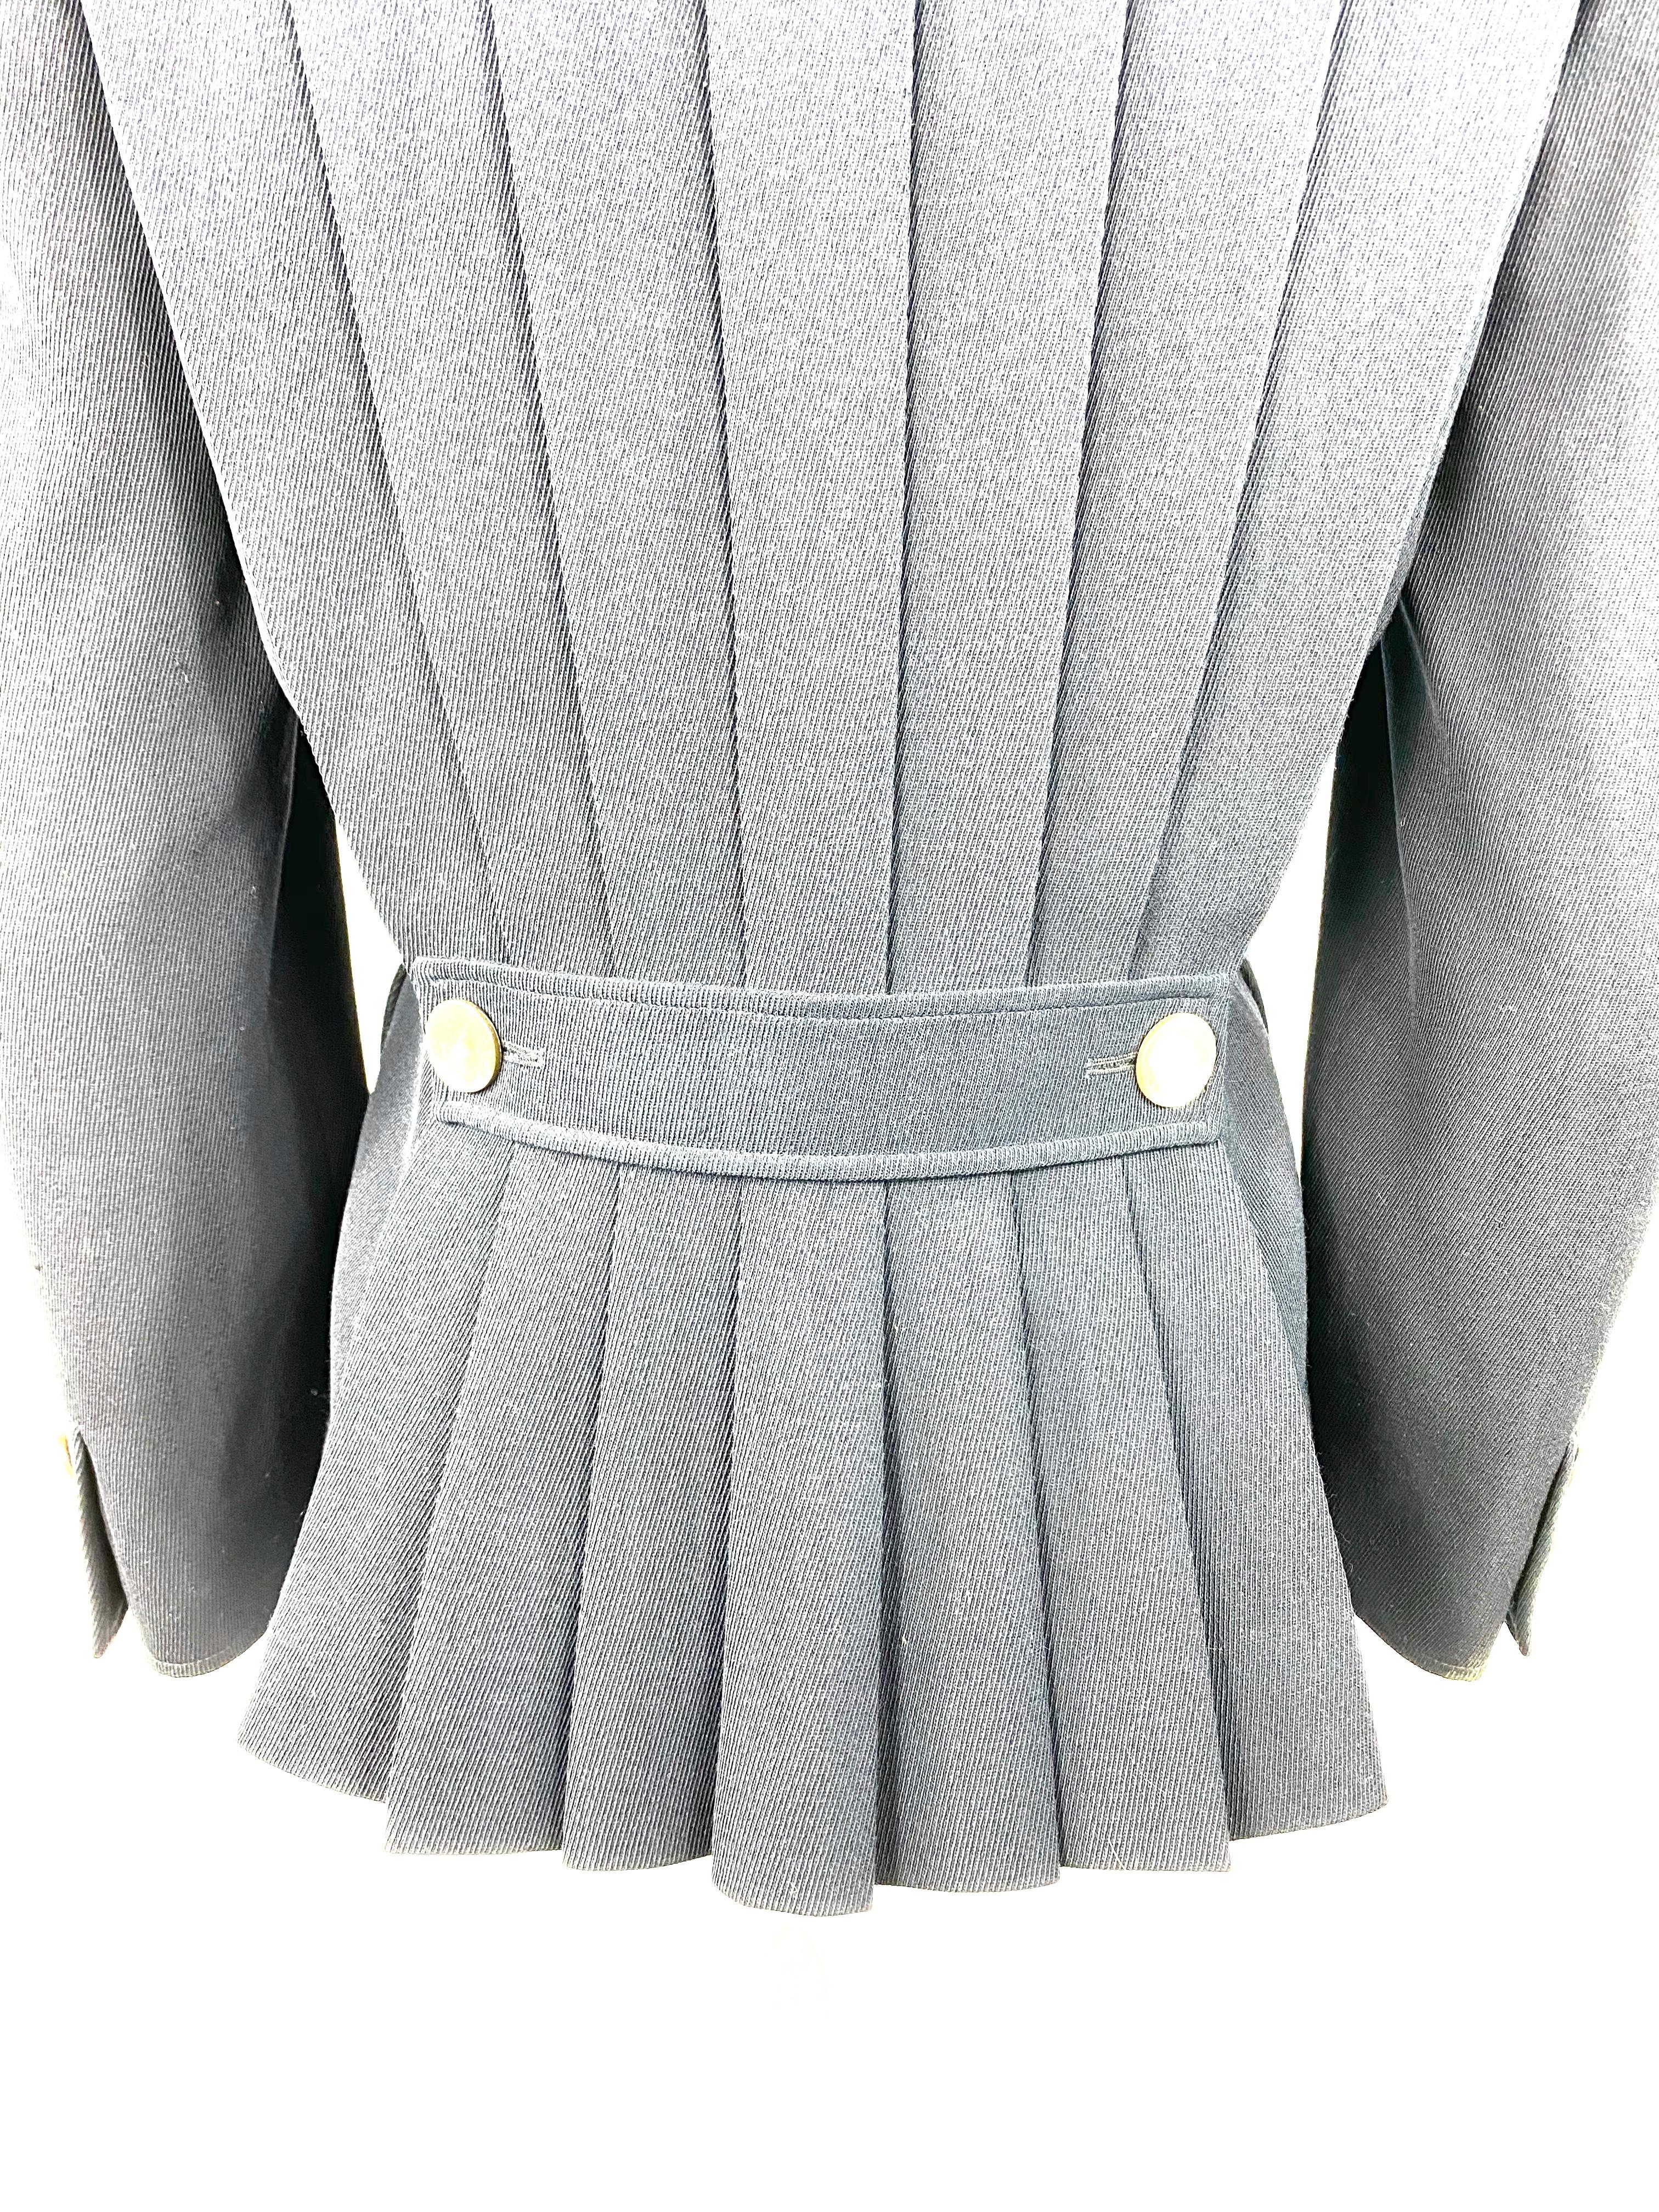 Valentino Boutique Navy Blazer Jacket Size 6 For Sale 6